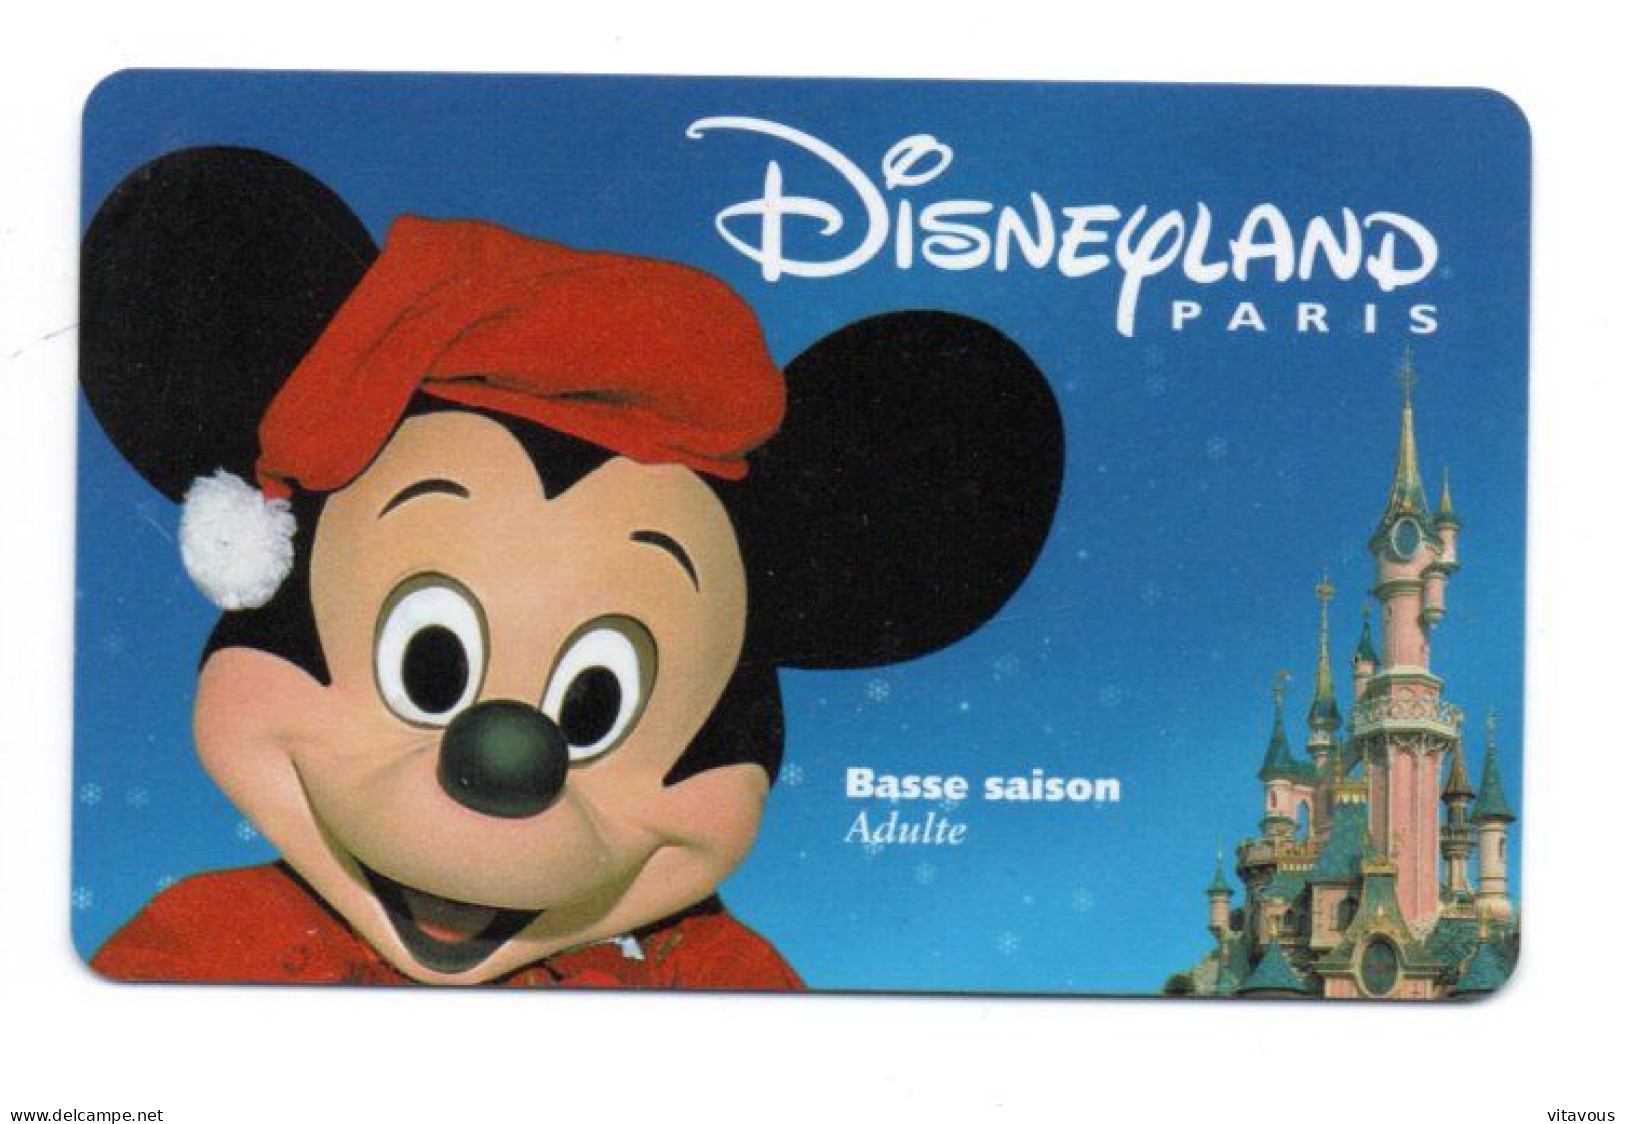 Passeport Disney Disneyland  PARIS France Card  (F 119) - Passaporti  Disney